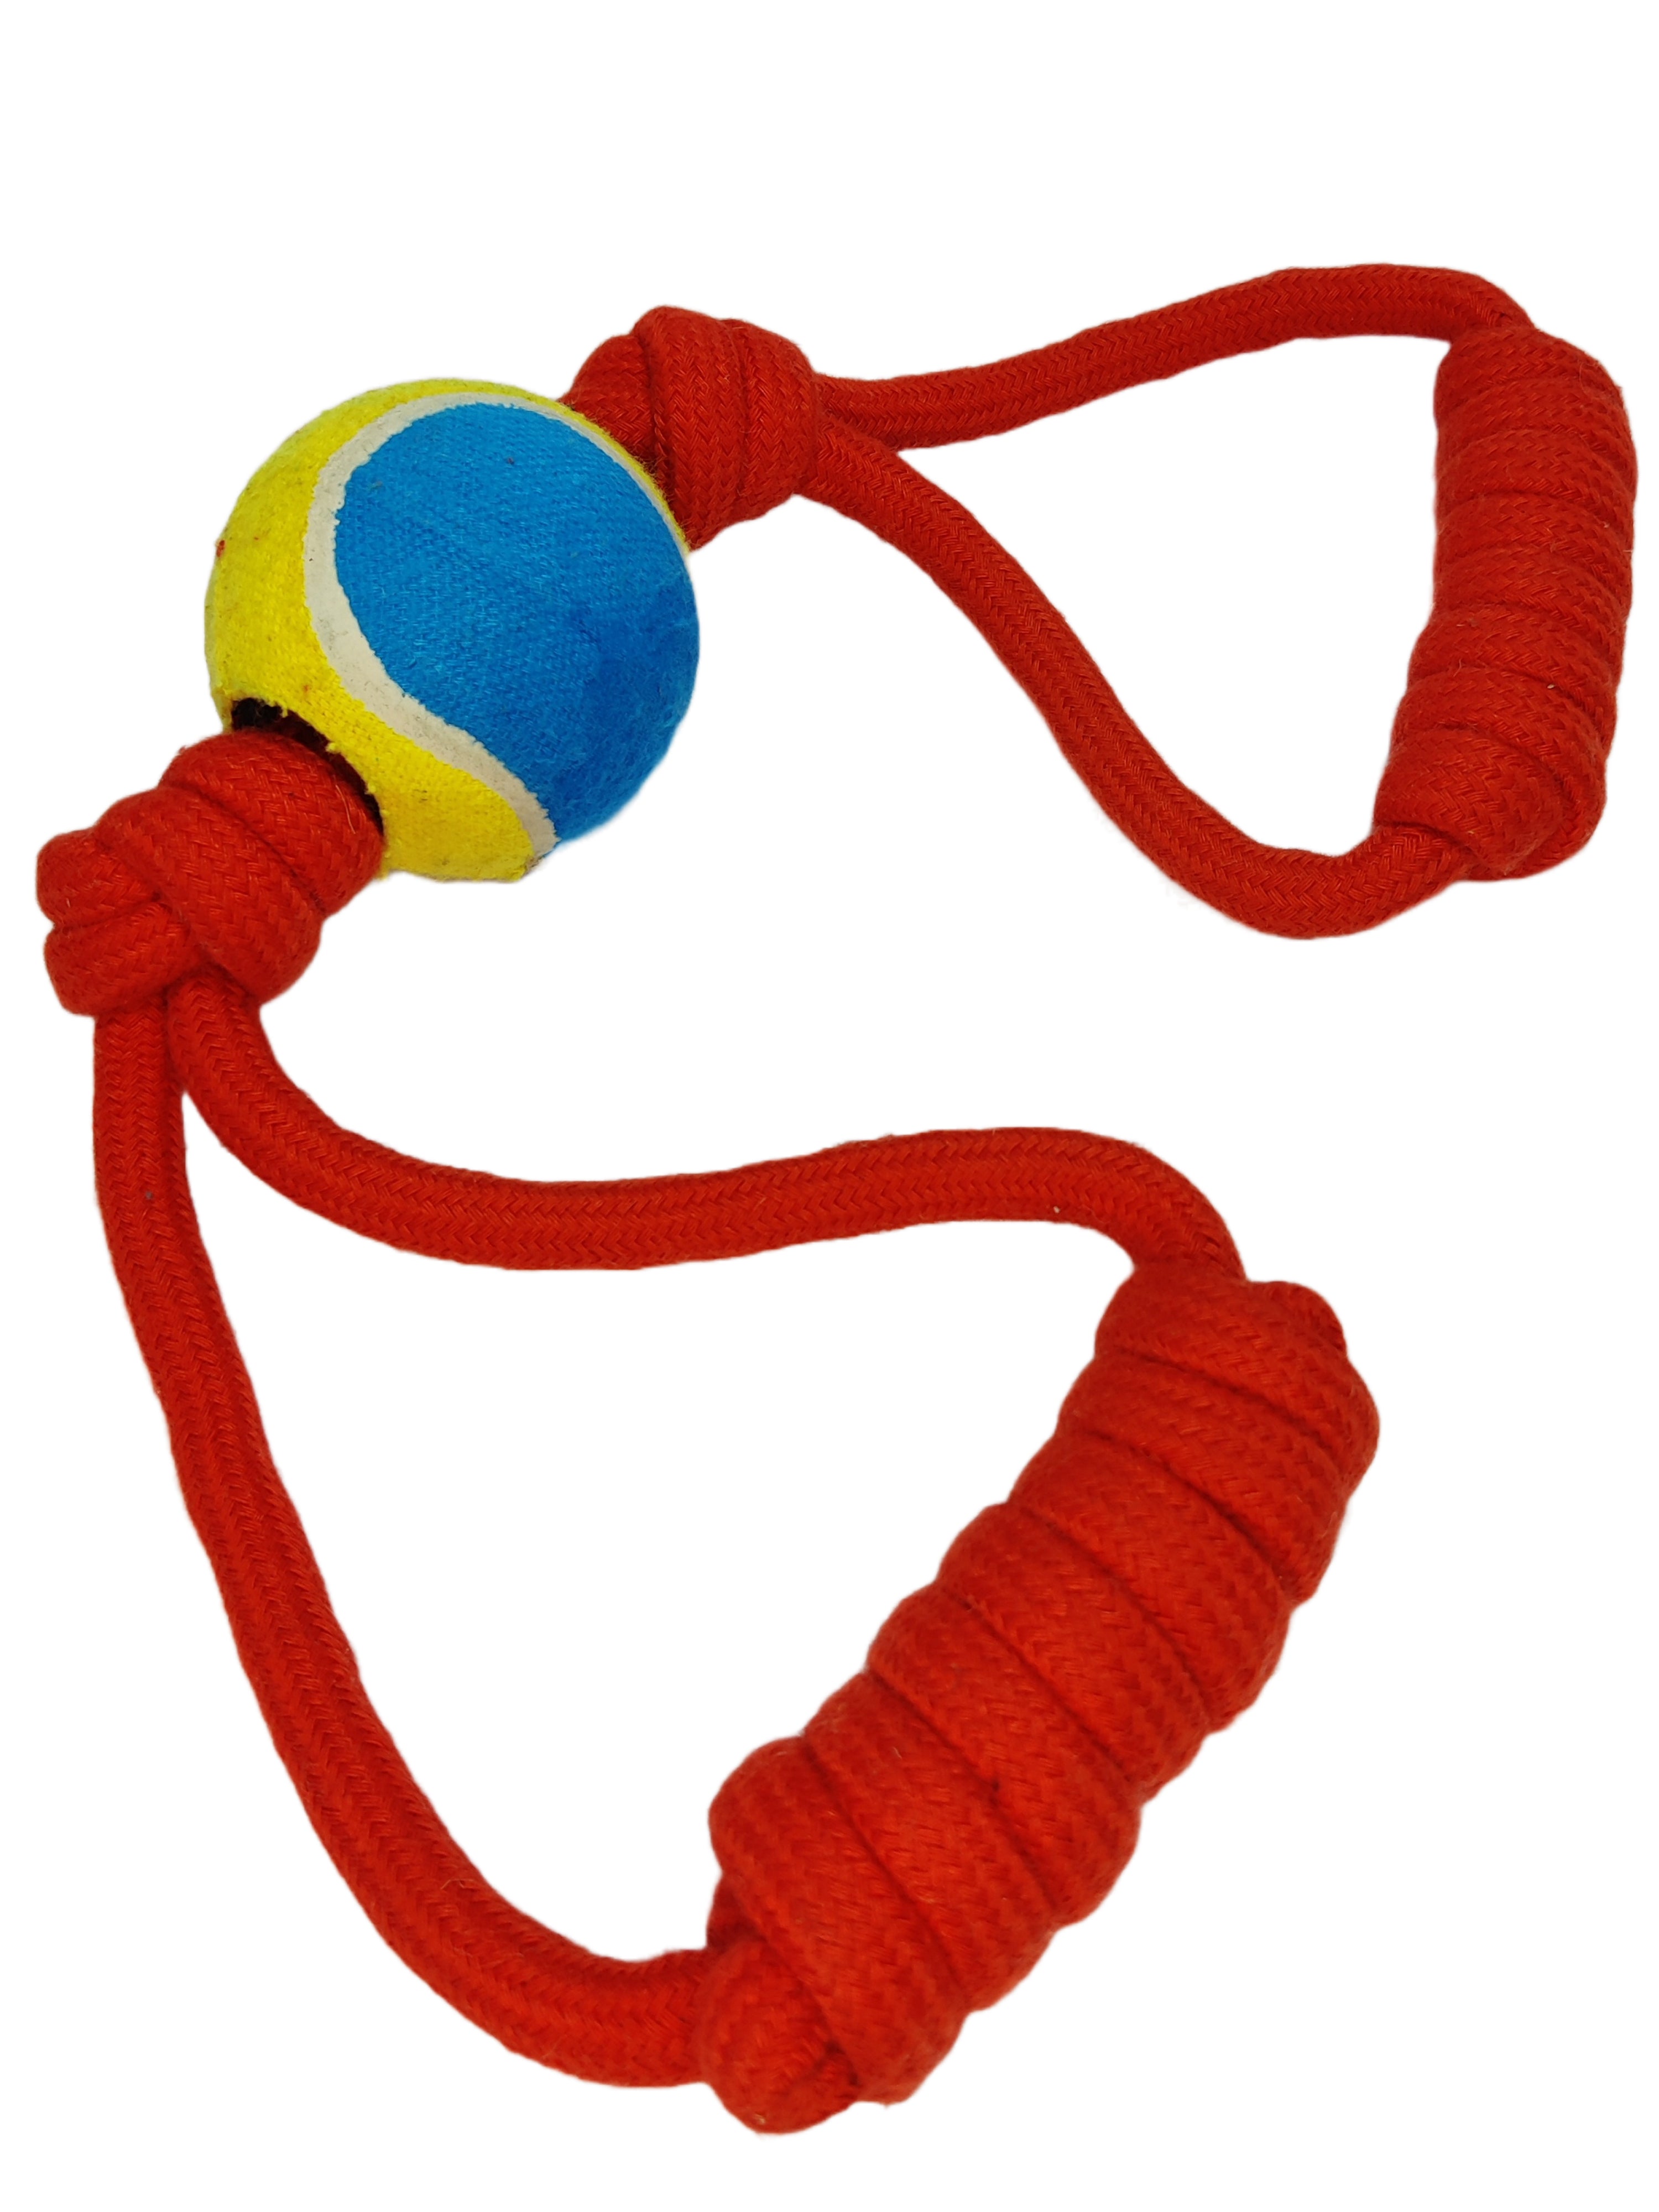 Double Handle Cosco Tug Rope Toy